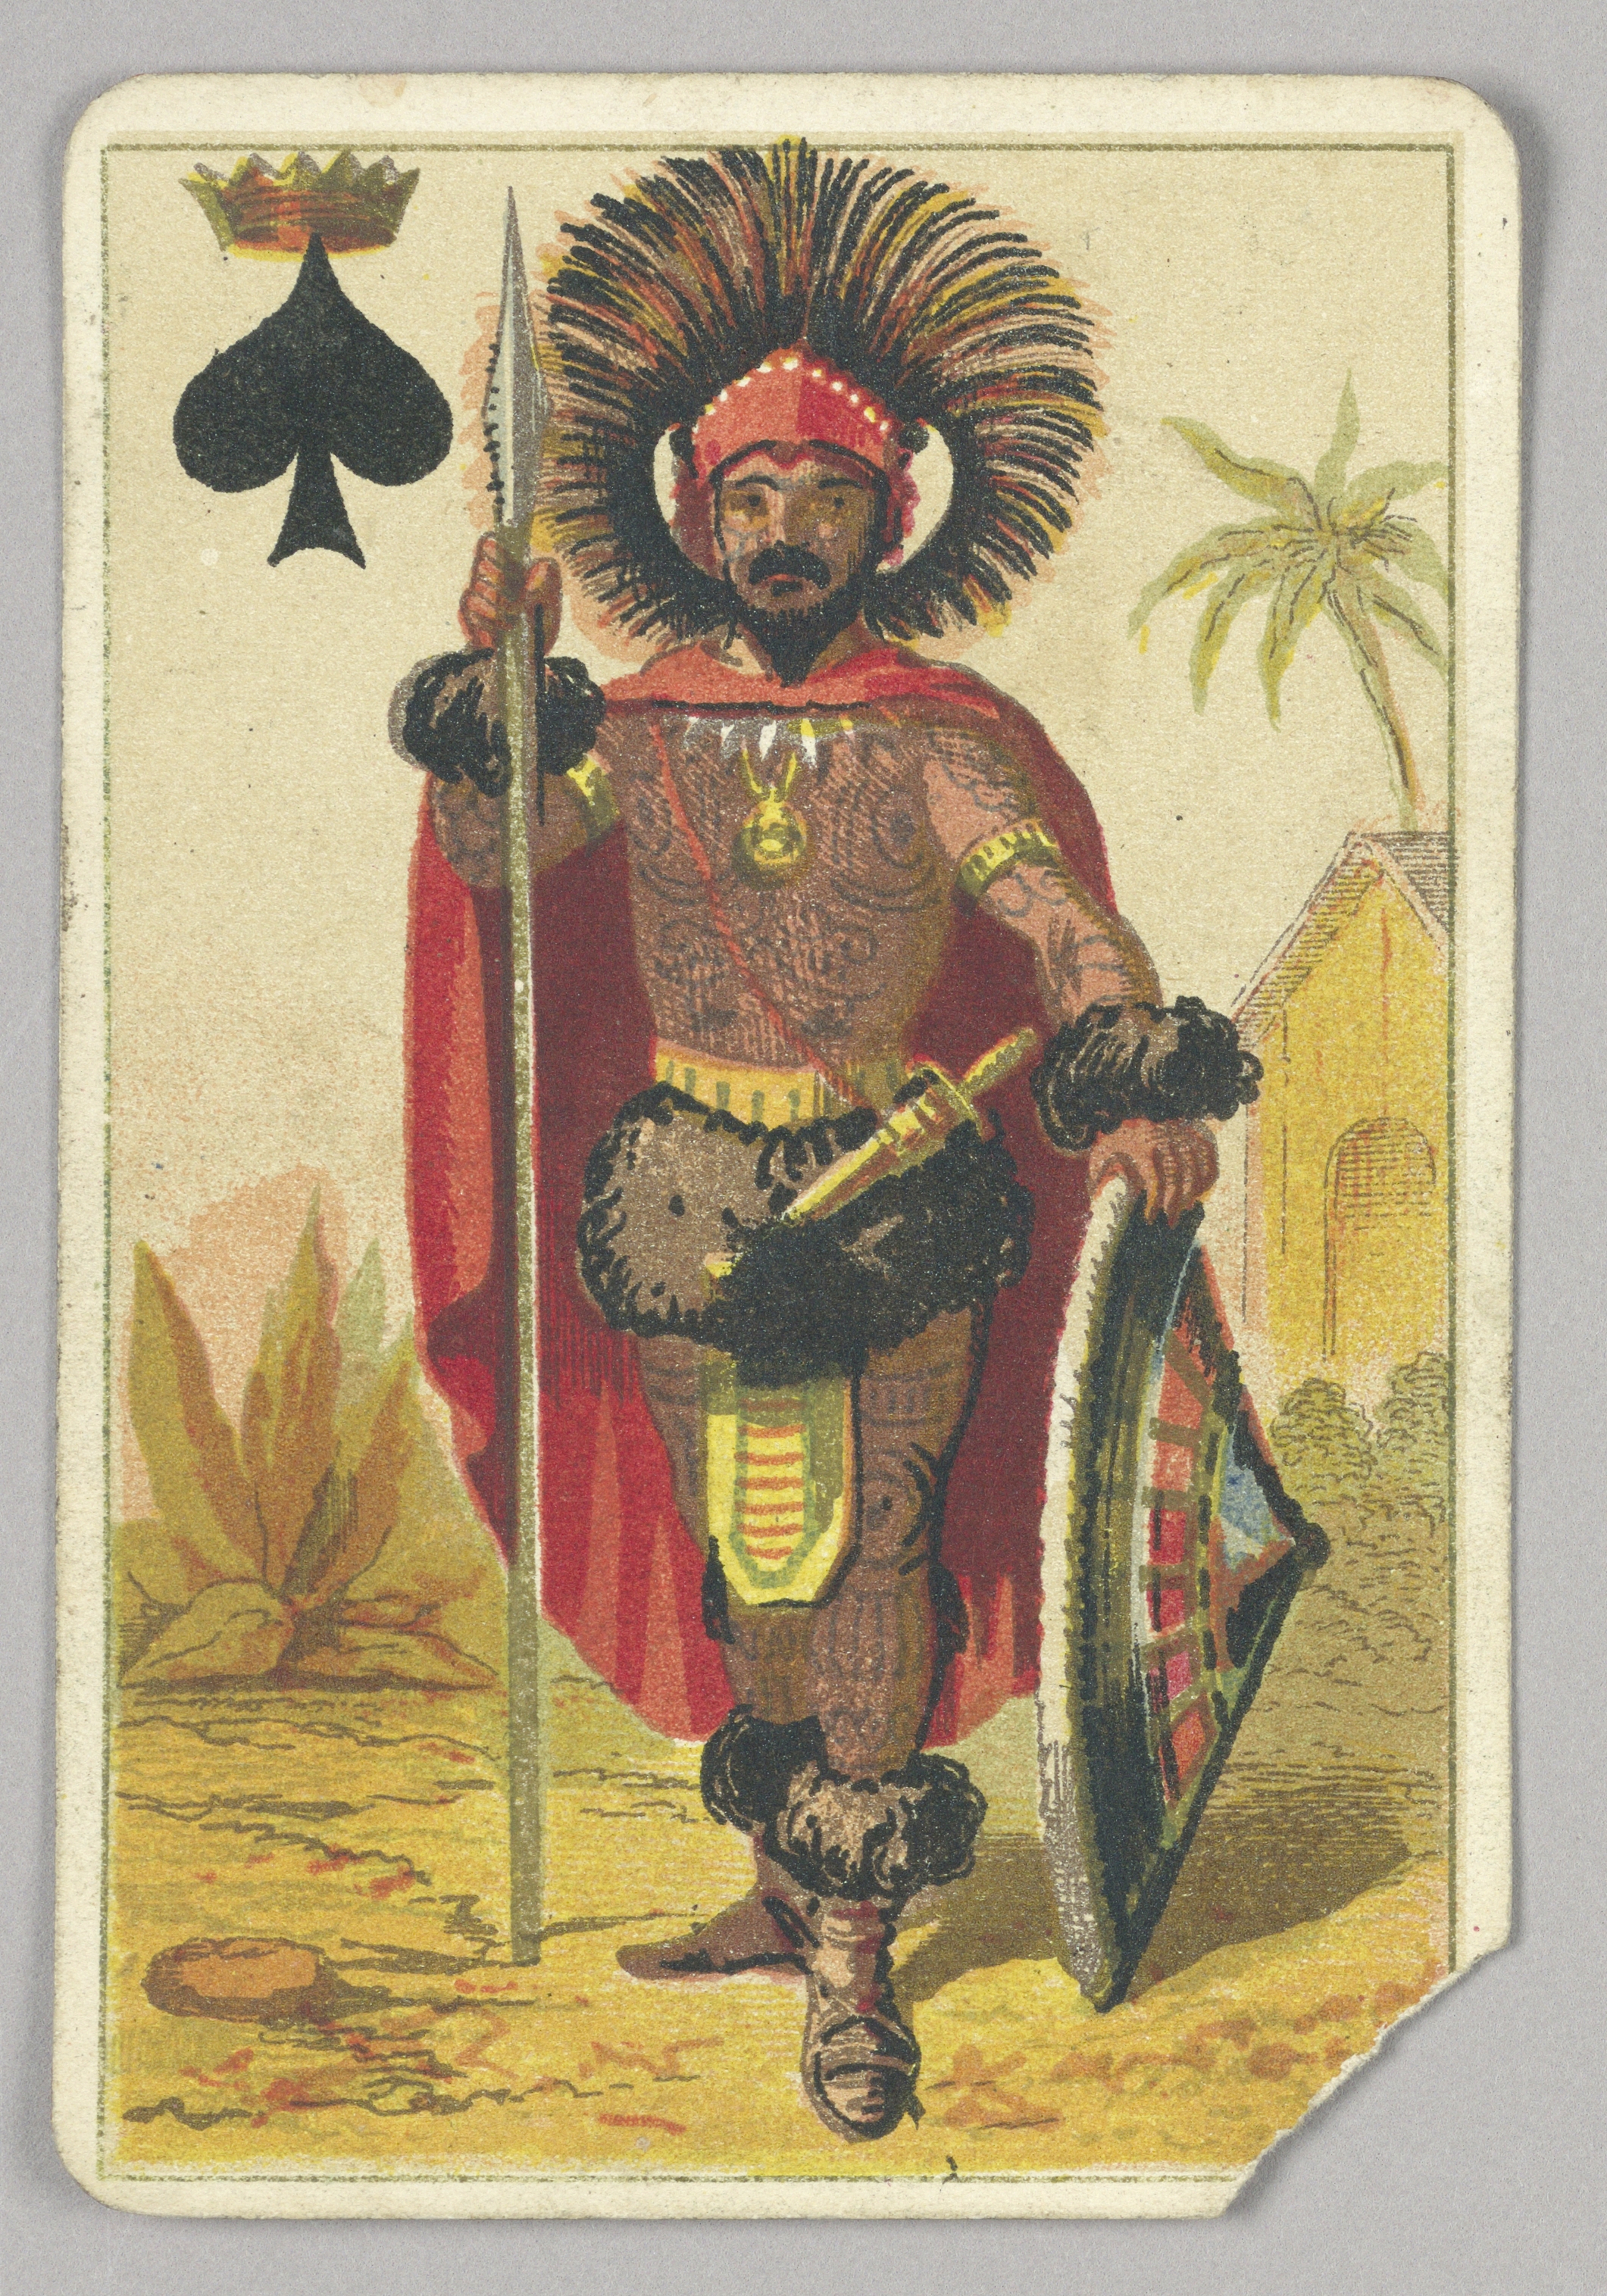 King (playing card) - Wikipedia